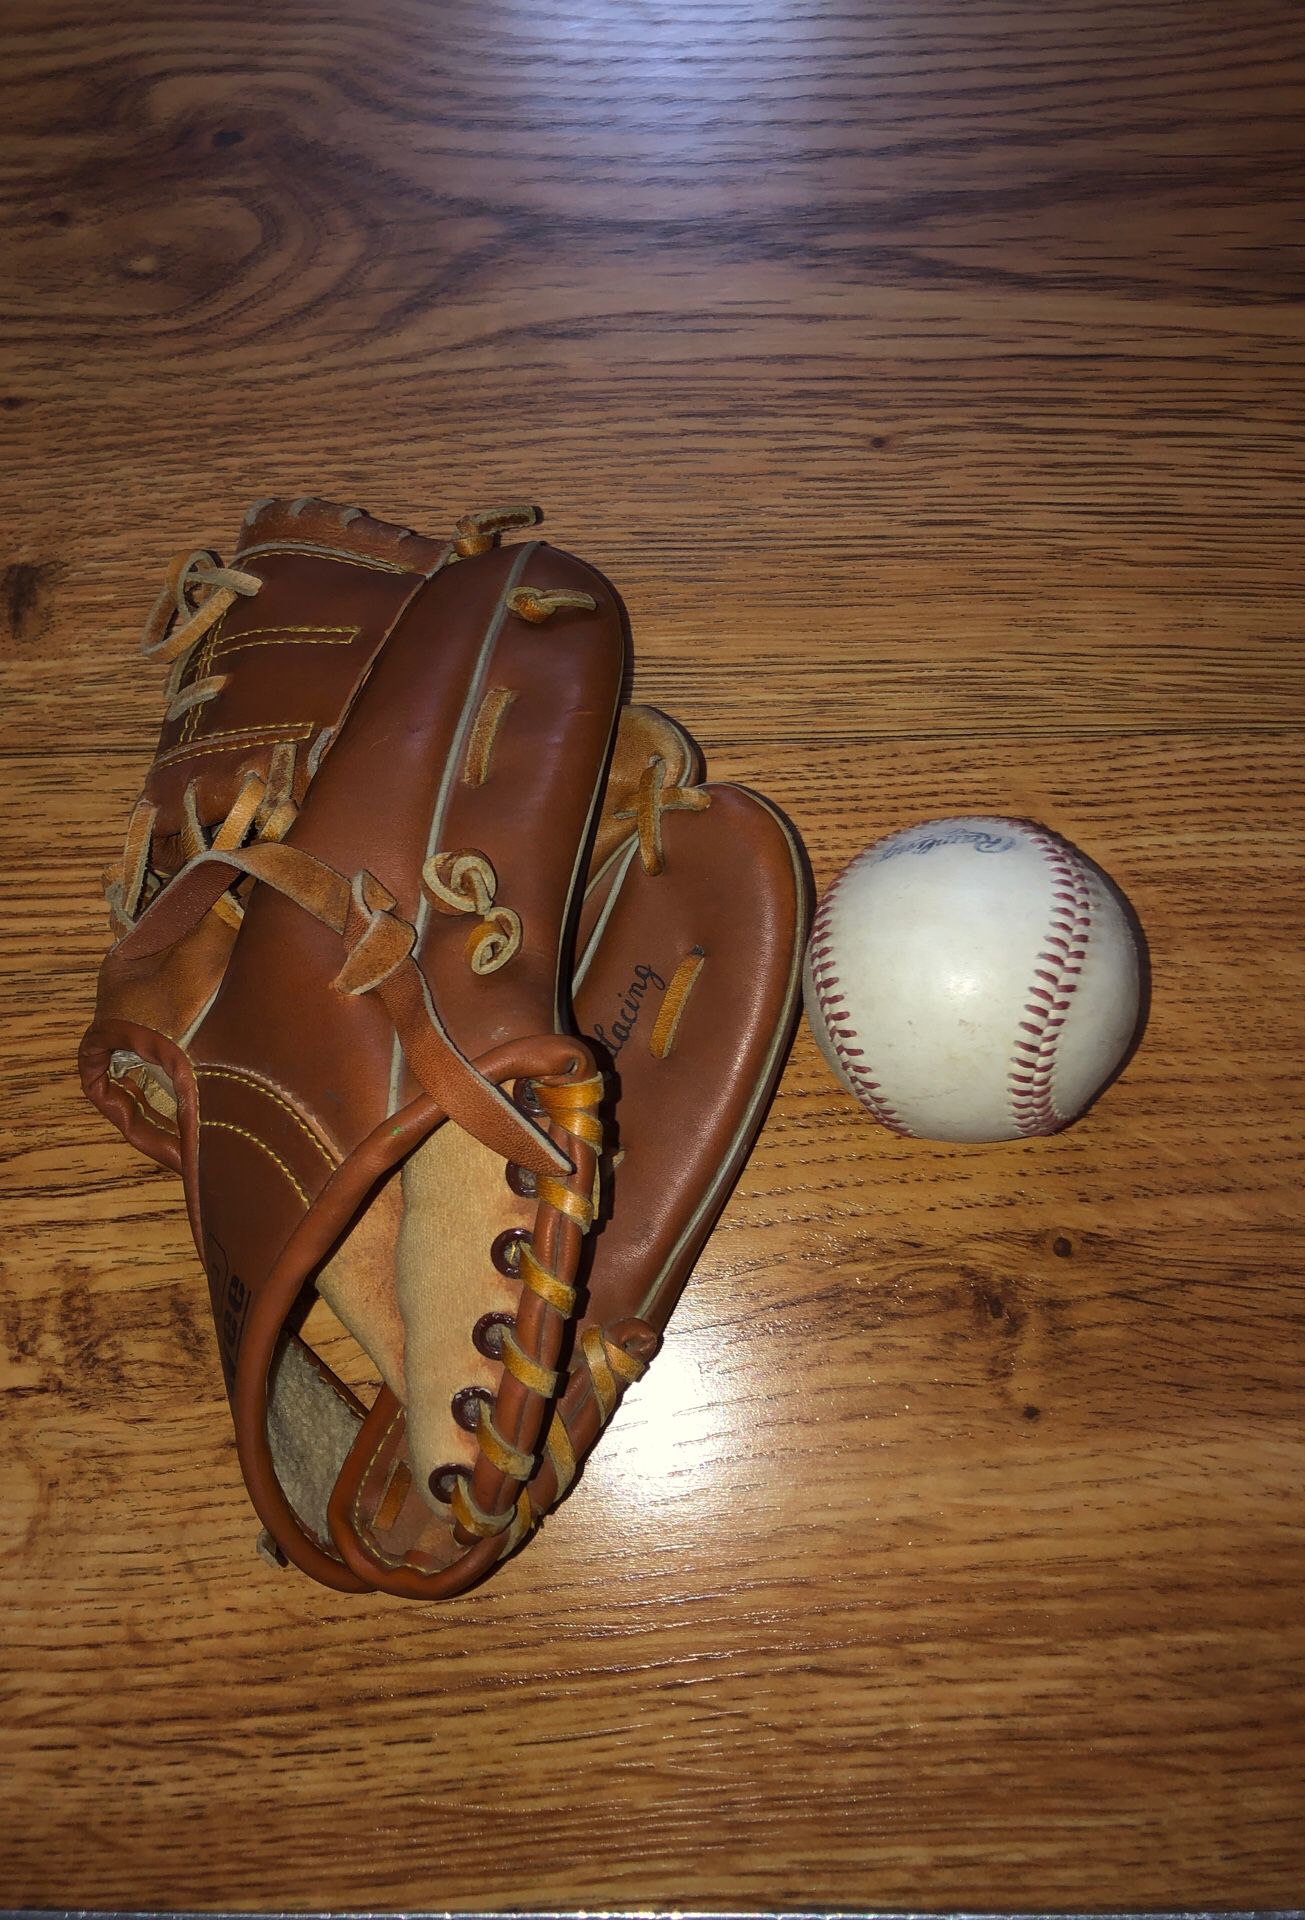 Junior Baseball Glove with Carolina League Rawlings Baseball